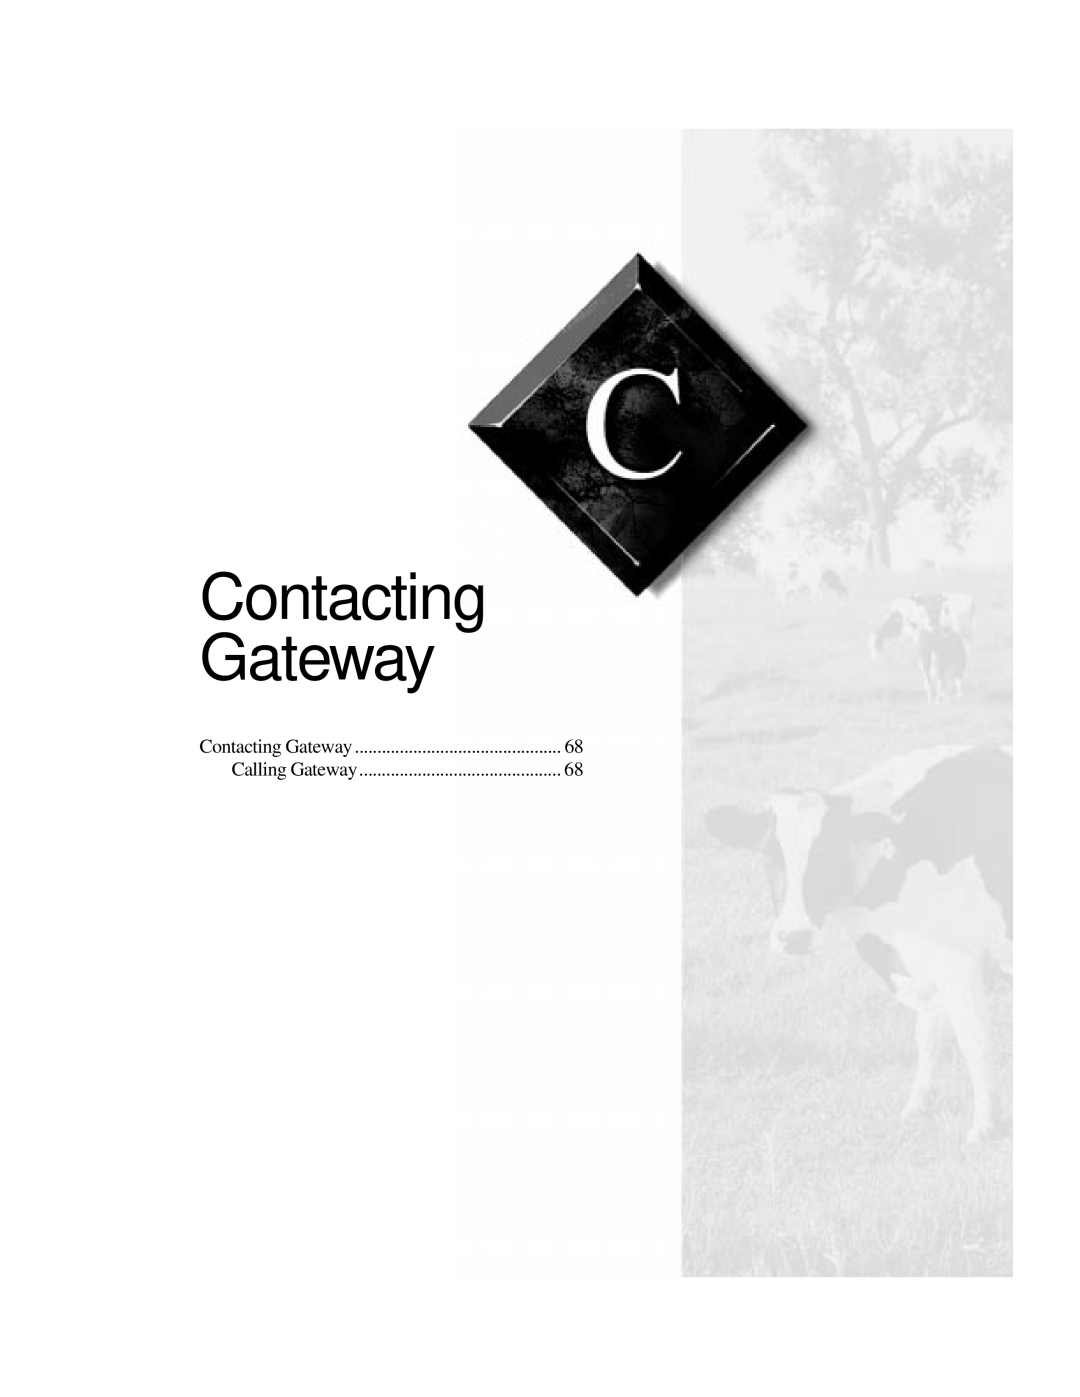 Gateway TM 5150 manual Contacting Gateway, Calling Gateway 